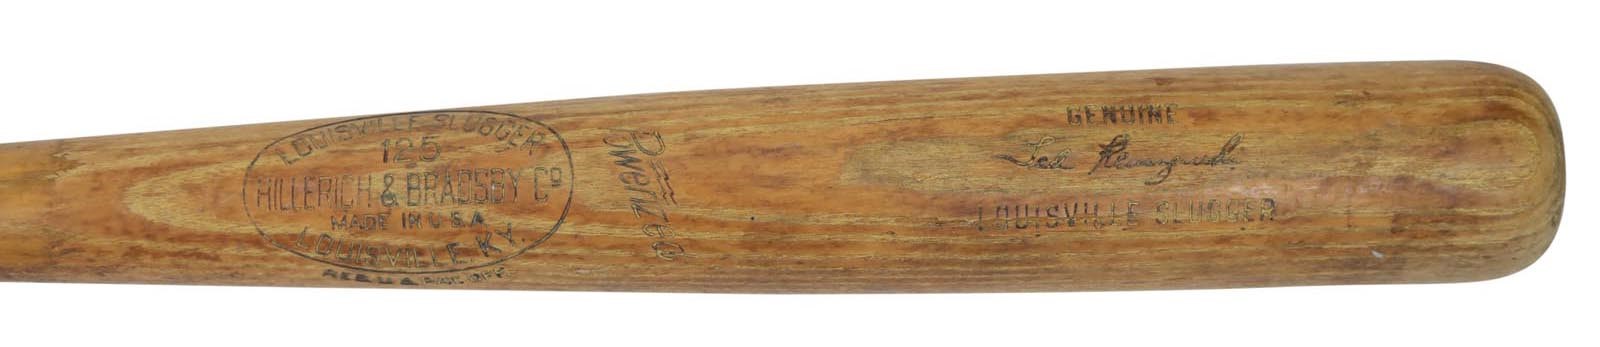 - 1950s Ted Kluszewski Game Used Bat with Fiberglass Grip